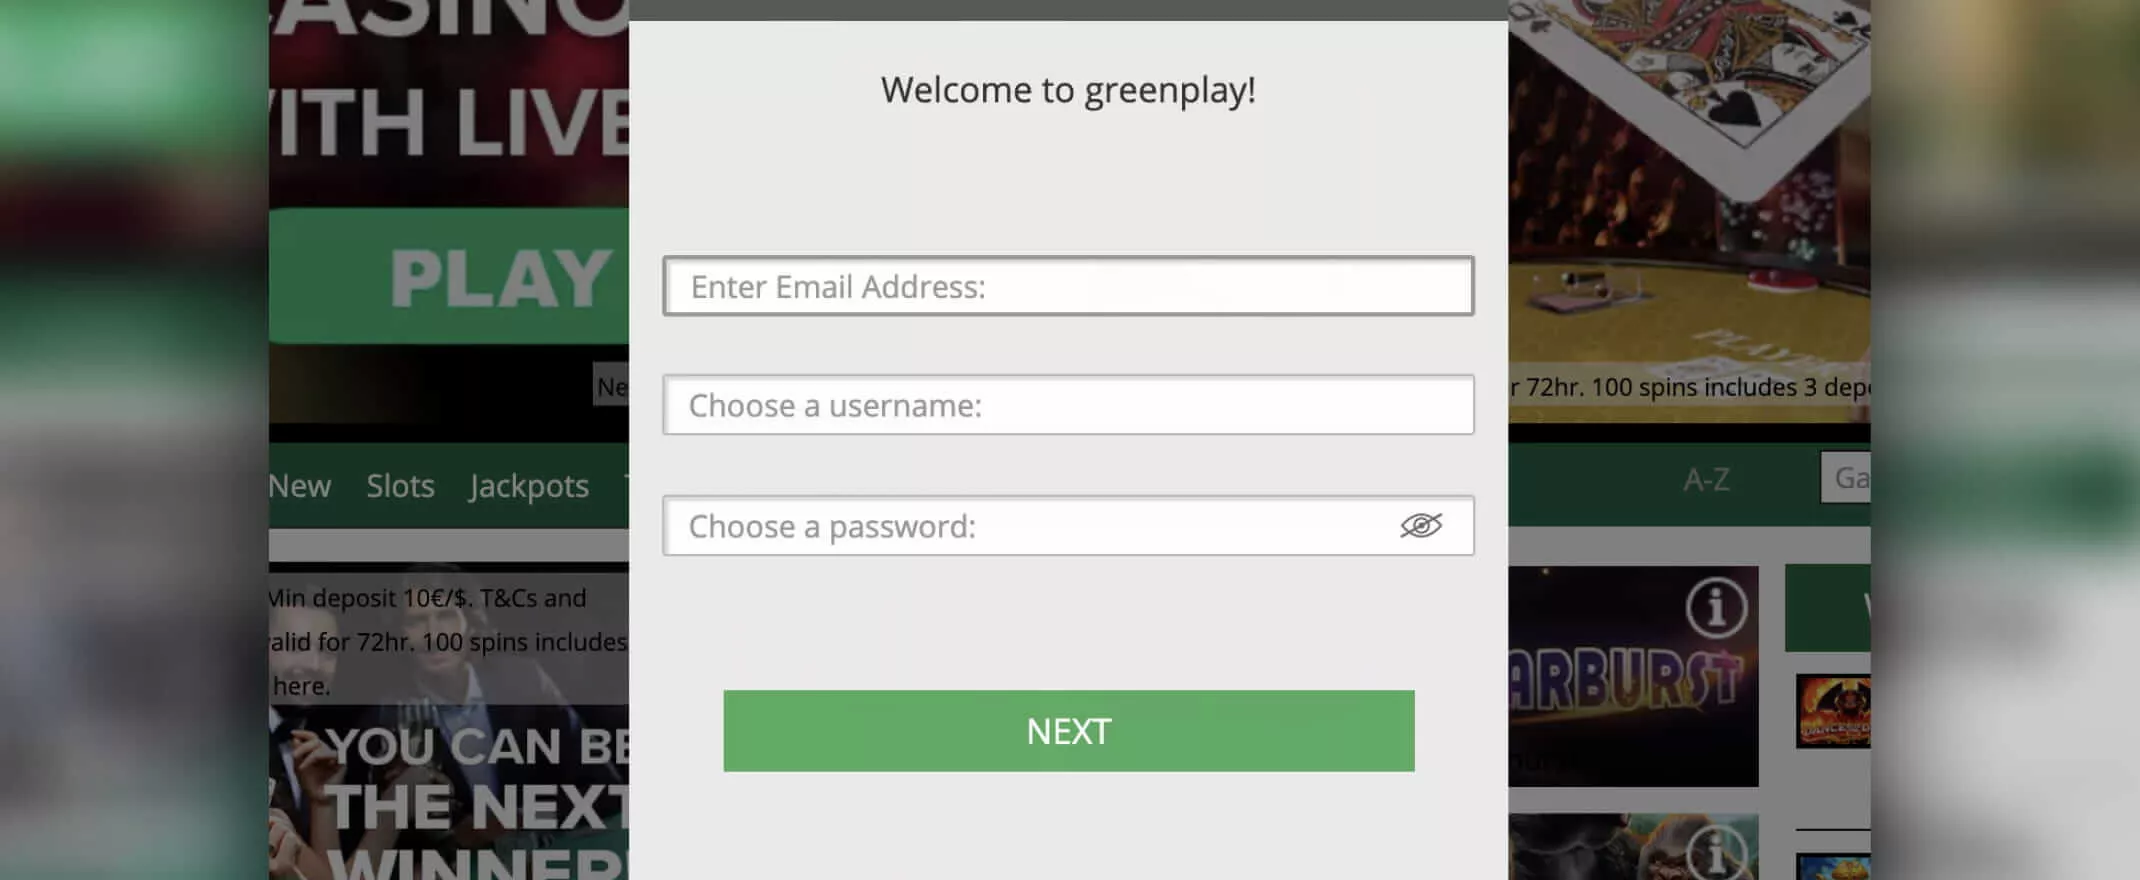 Greenplay screenshot of the registration